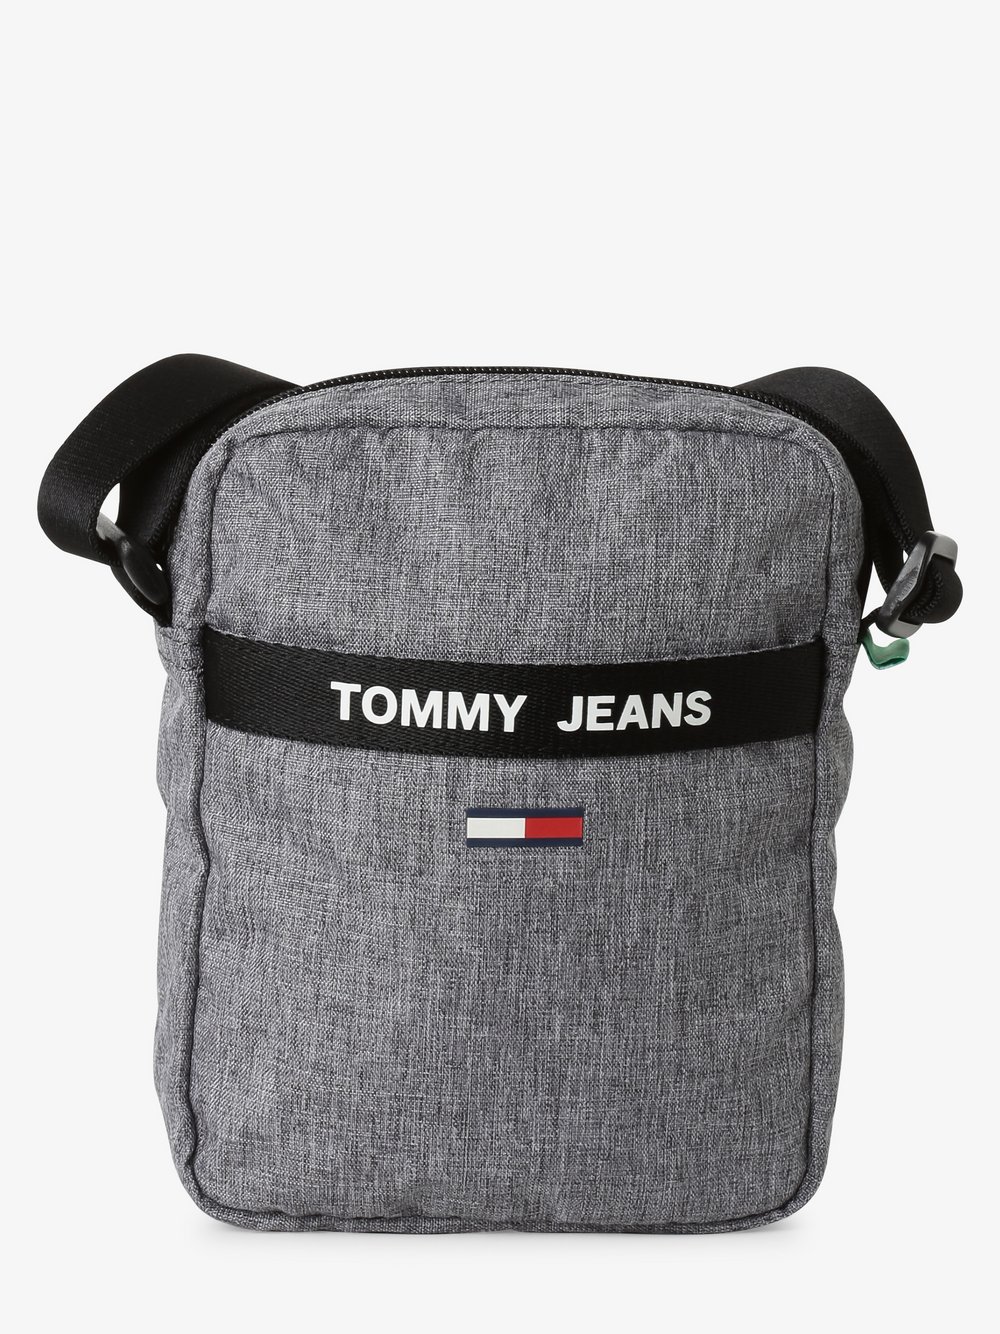 Tommy Jeans - Męska torebka na ramię, szary